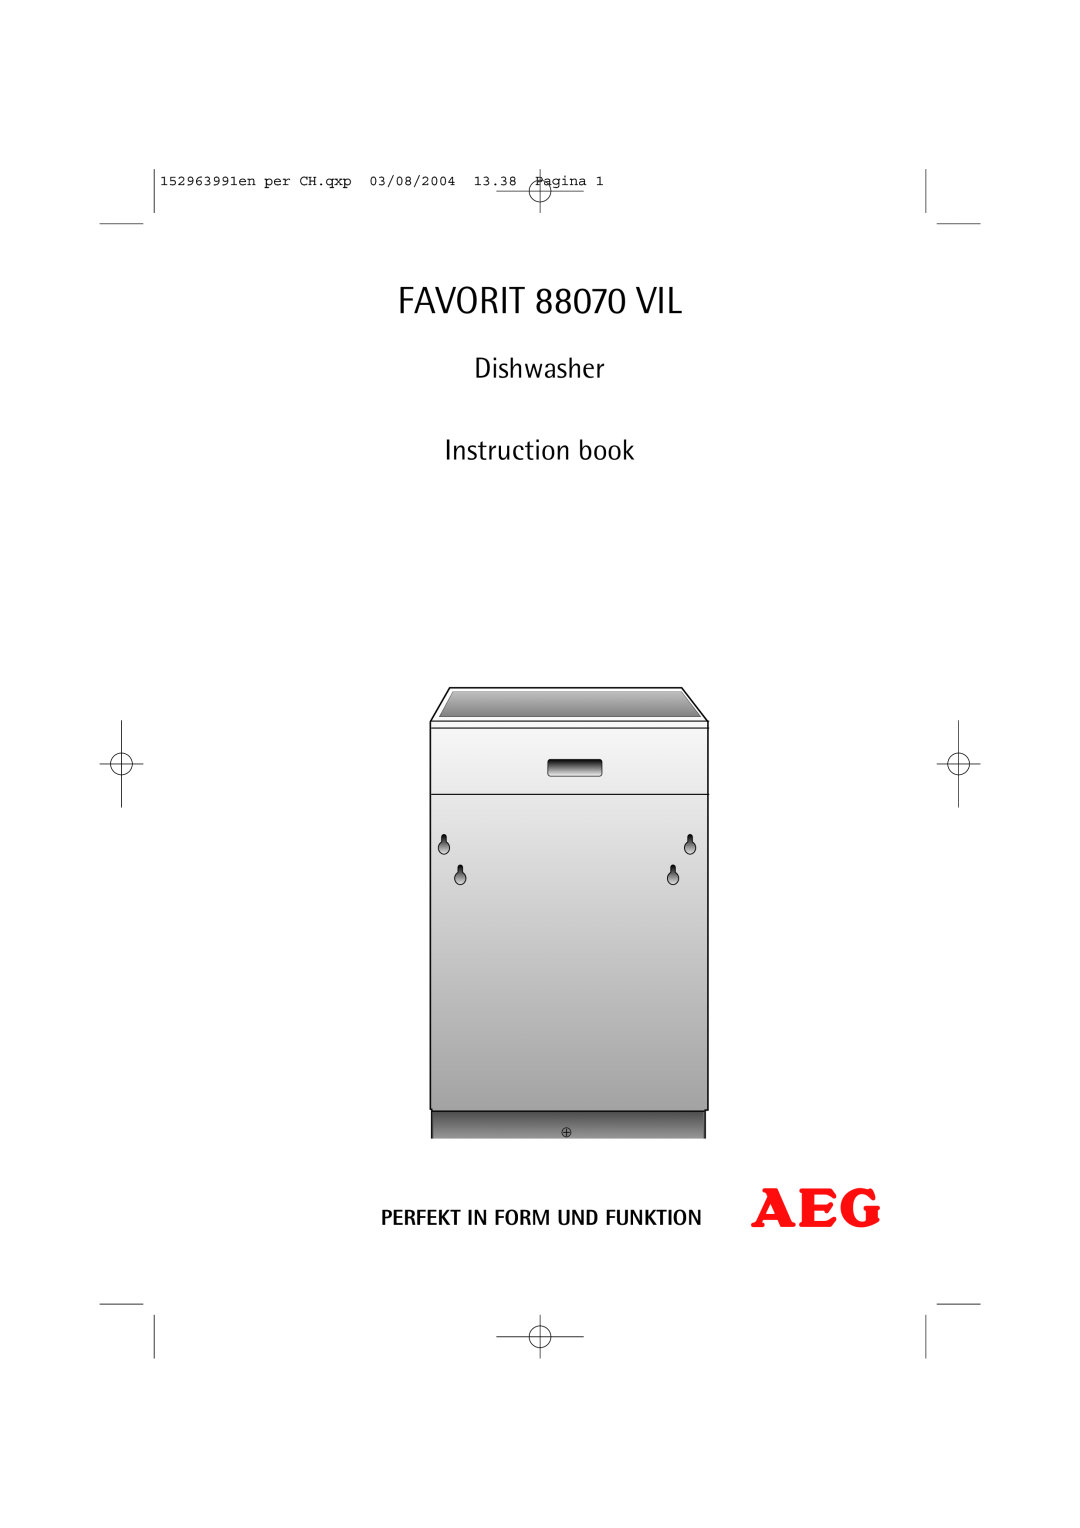 AEG manual Perfekt In Form Und Funktion, FAVORIT 88070 VIL, Dishwasher Instruction book 